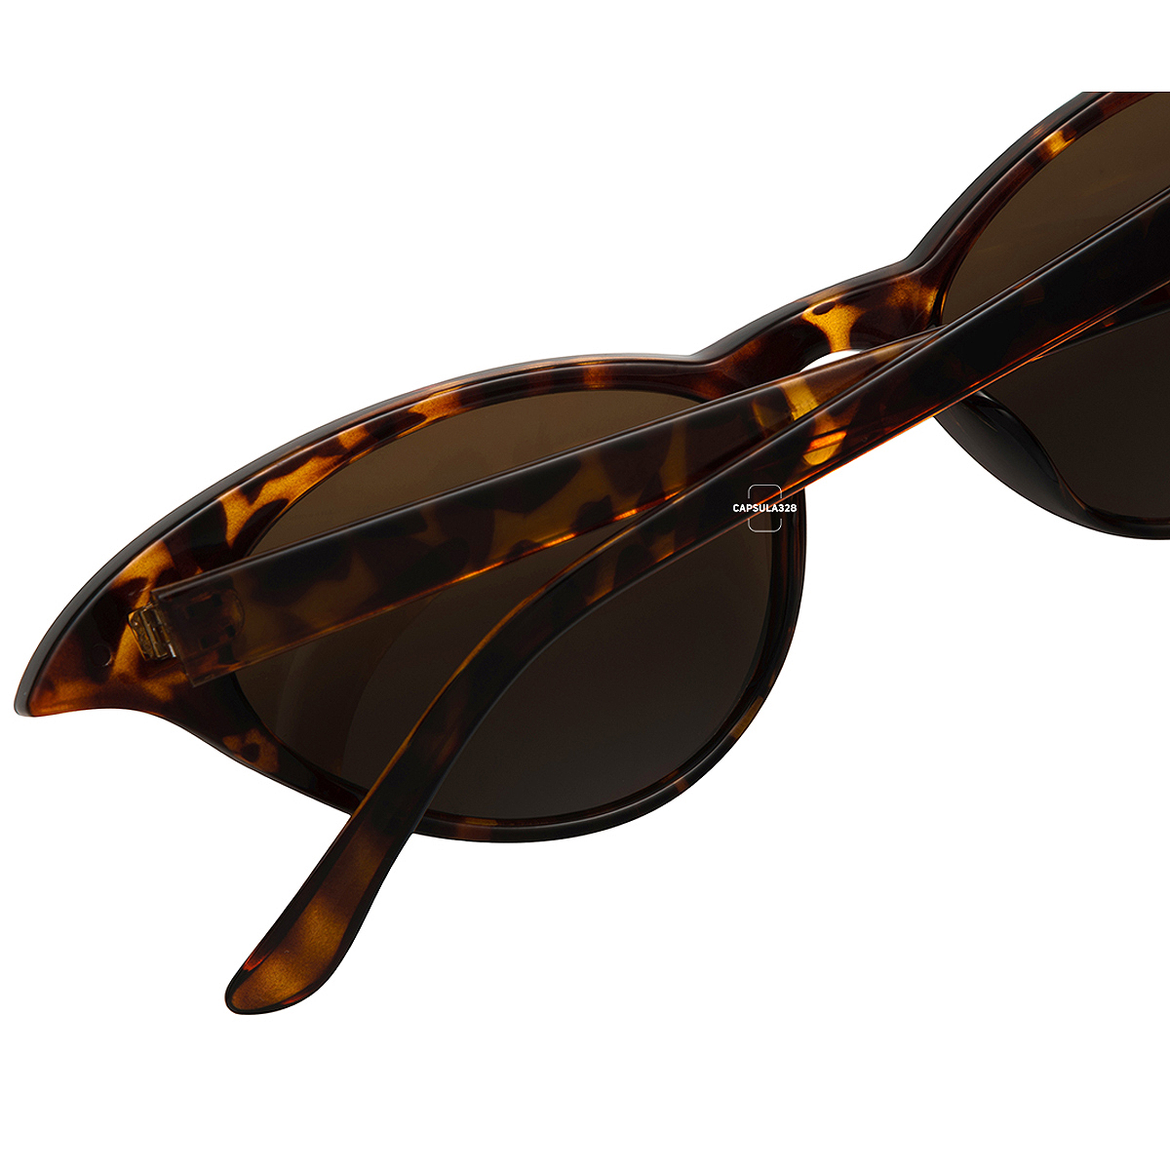 Сонцезахисні окуляри Butterfly 6804